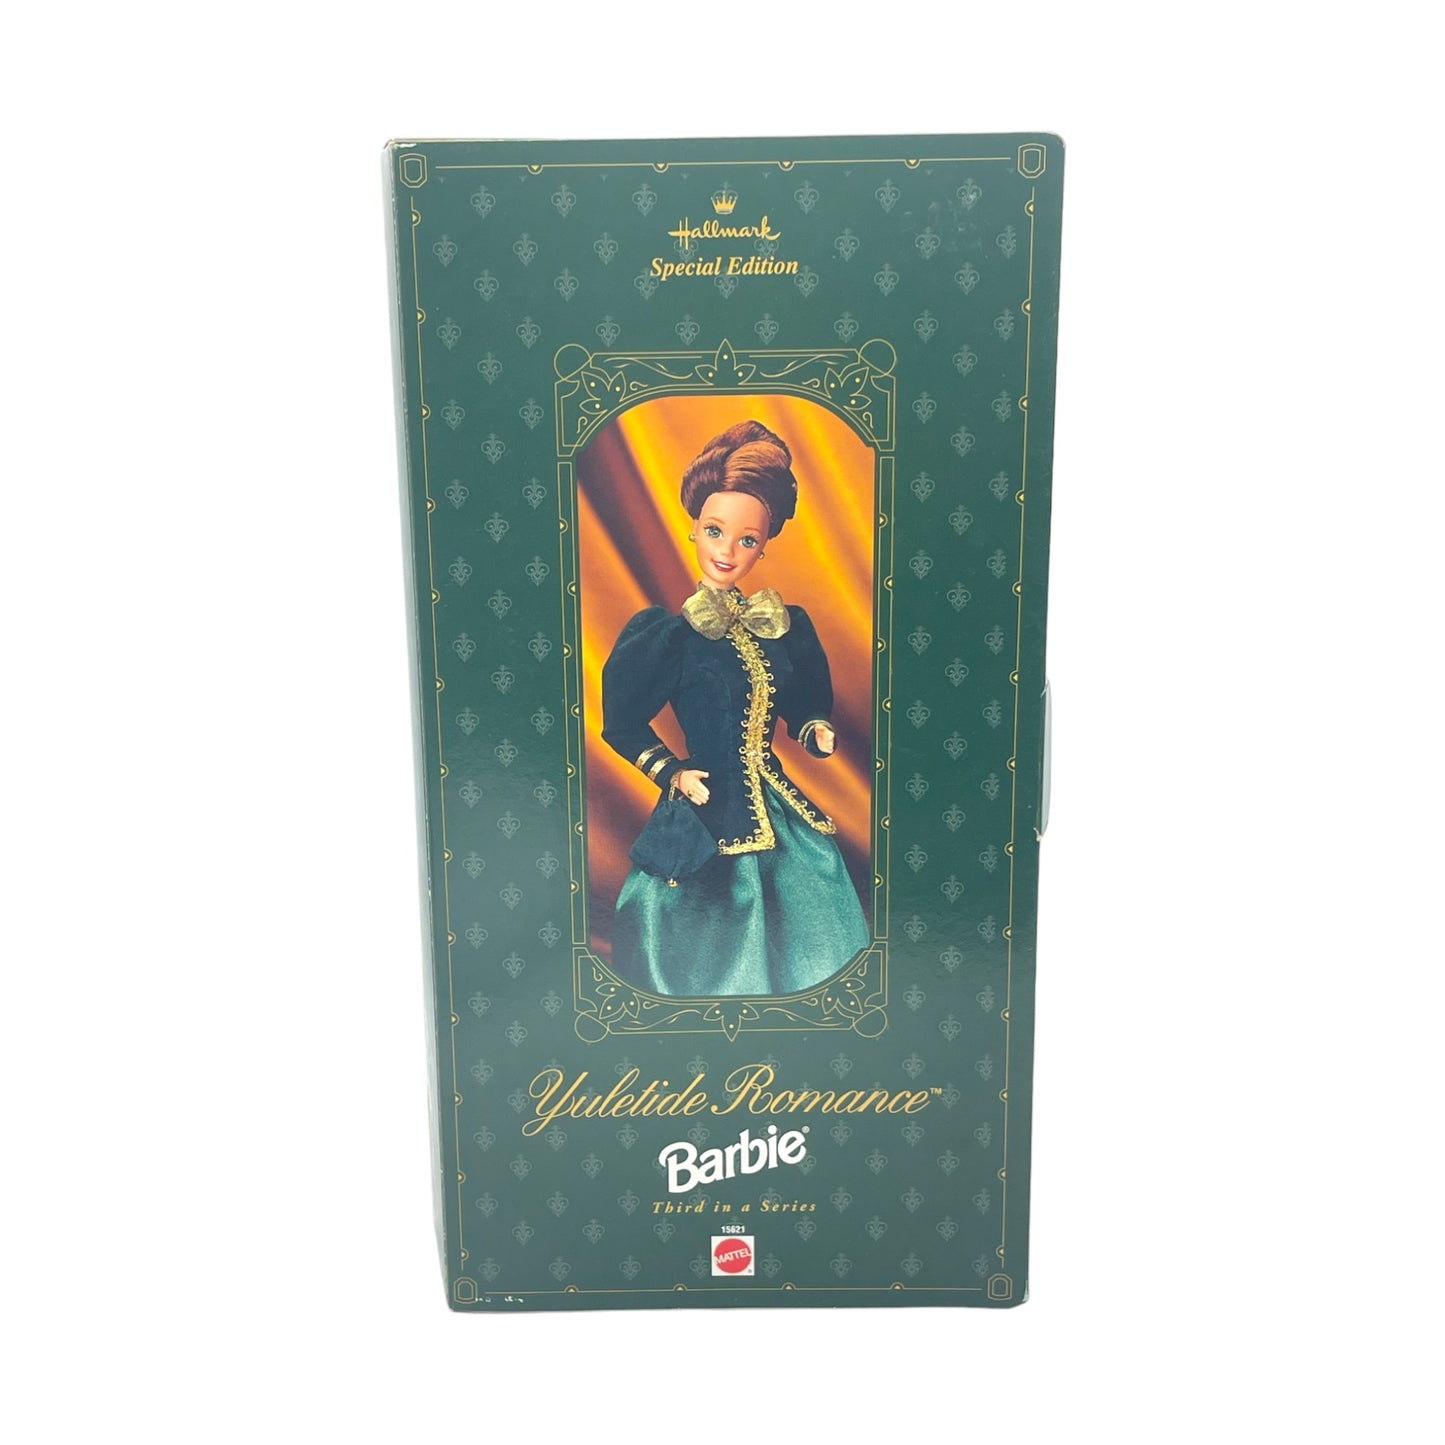 Mattel - Barbie - Hallmark - 1996 Special Edition - Yuletide Romance - 15621 - 12"